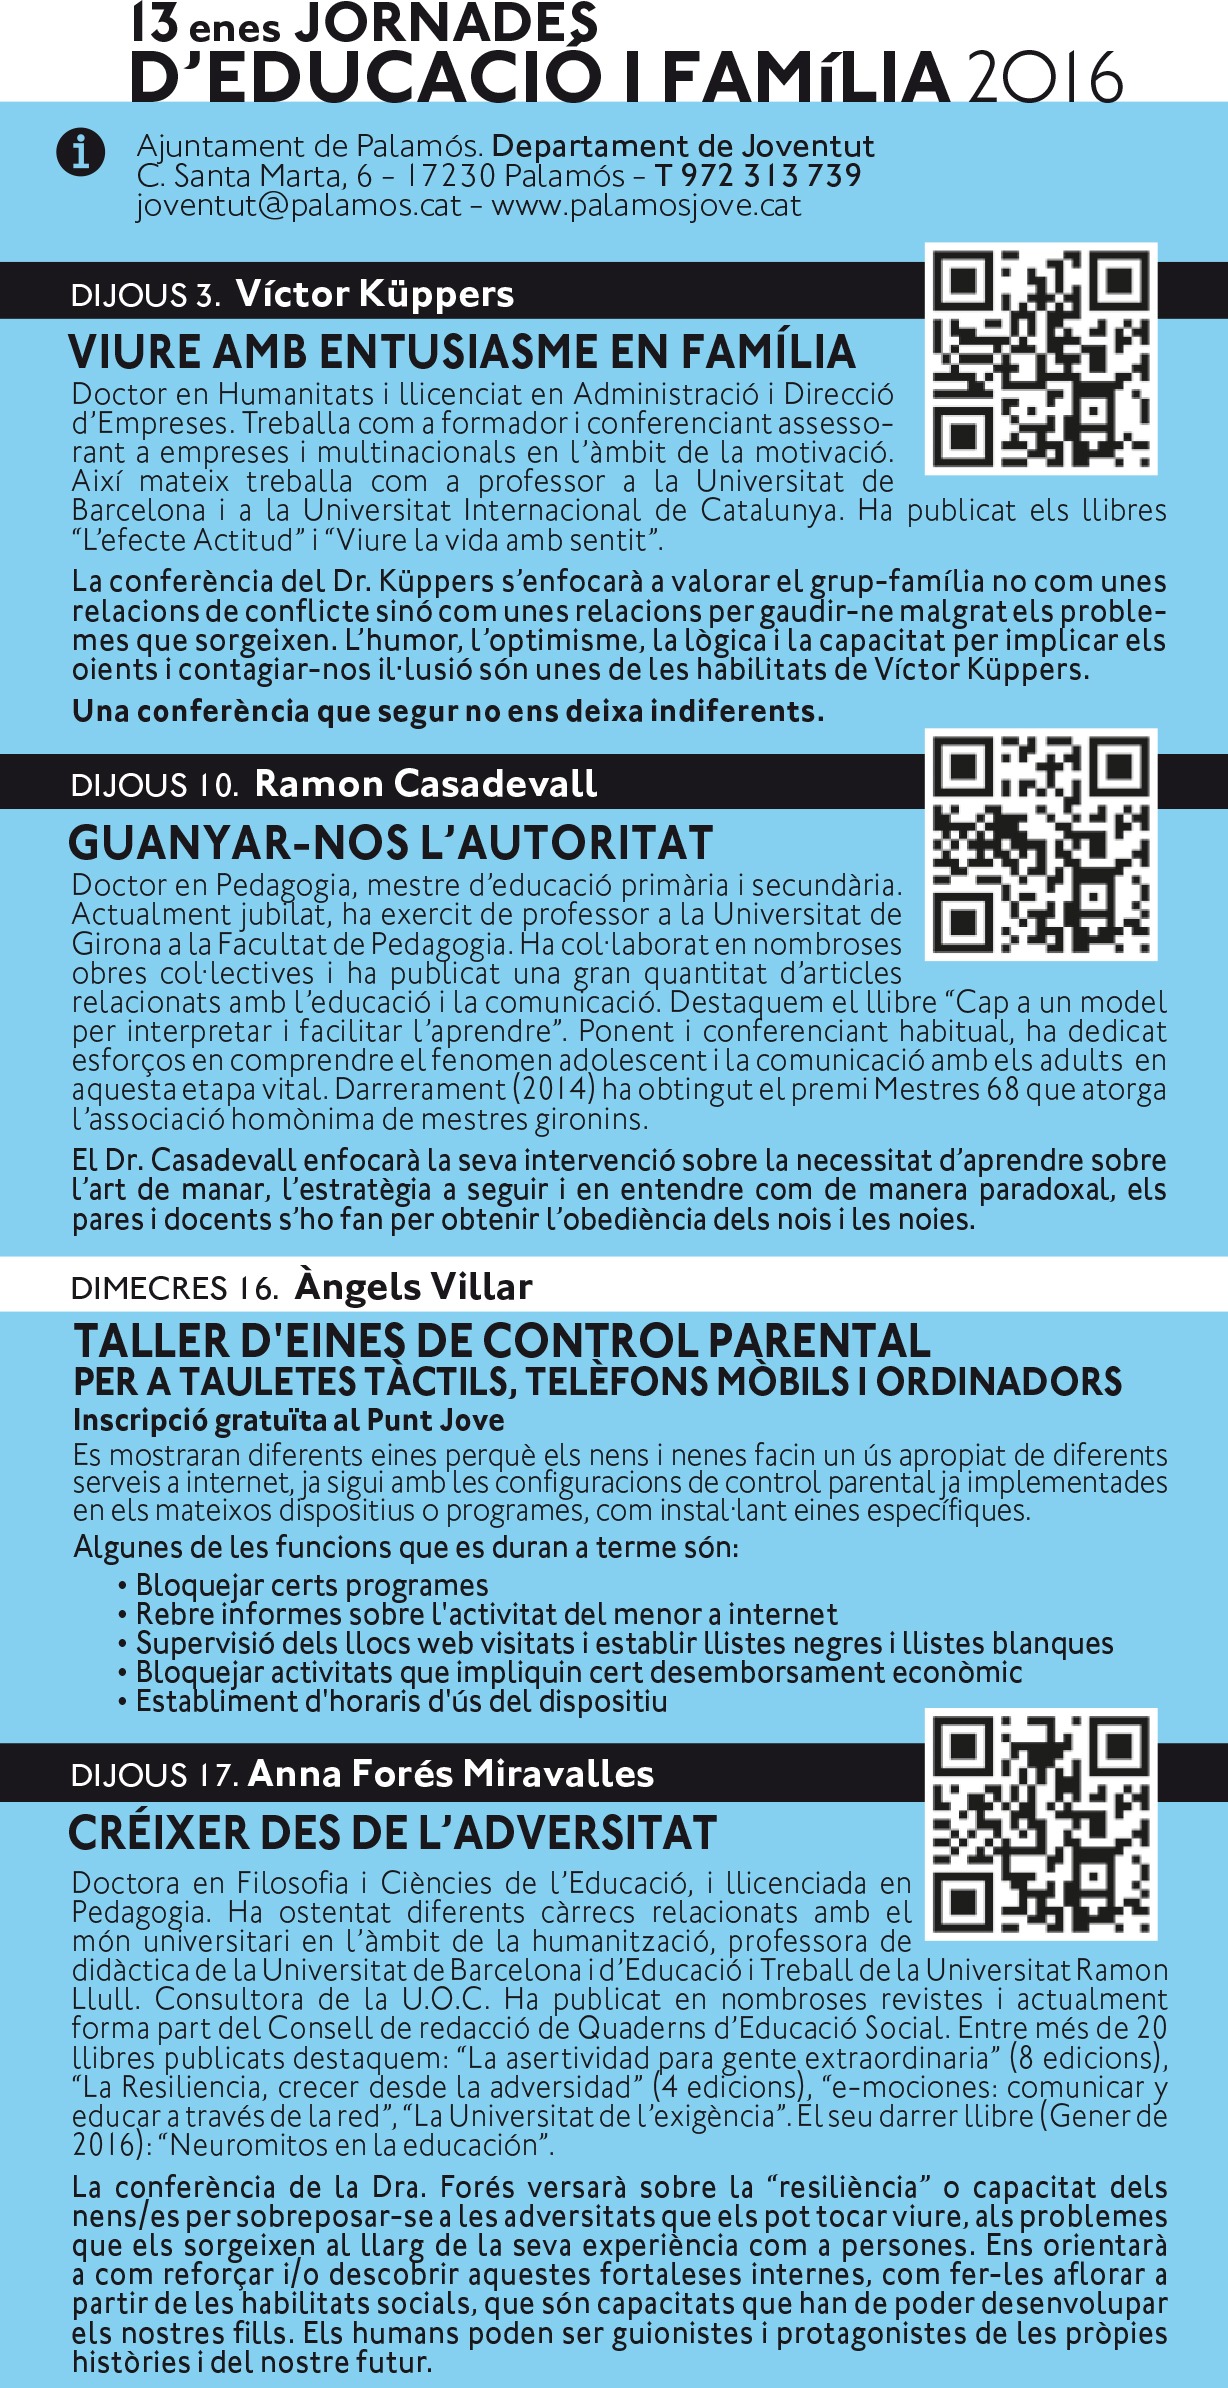 flyer_educacio_familia_16